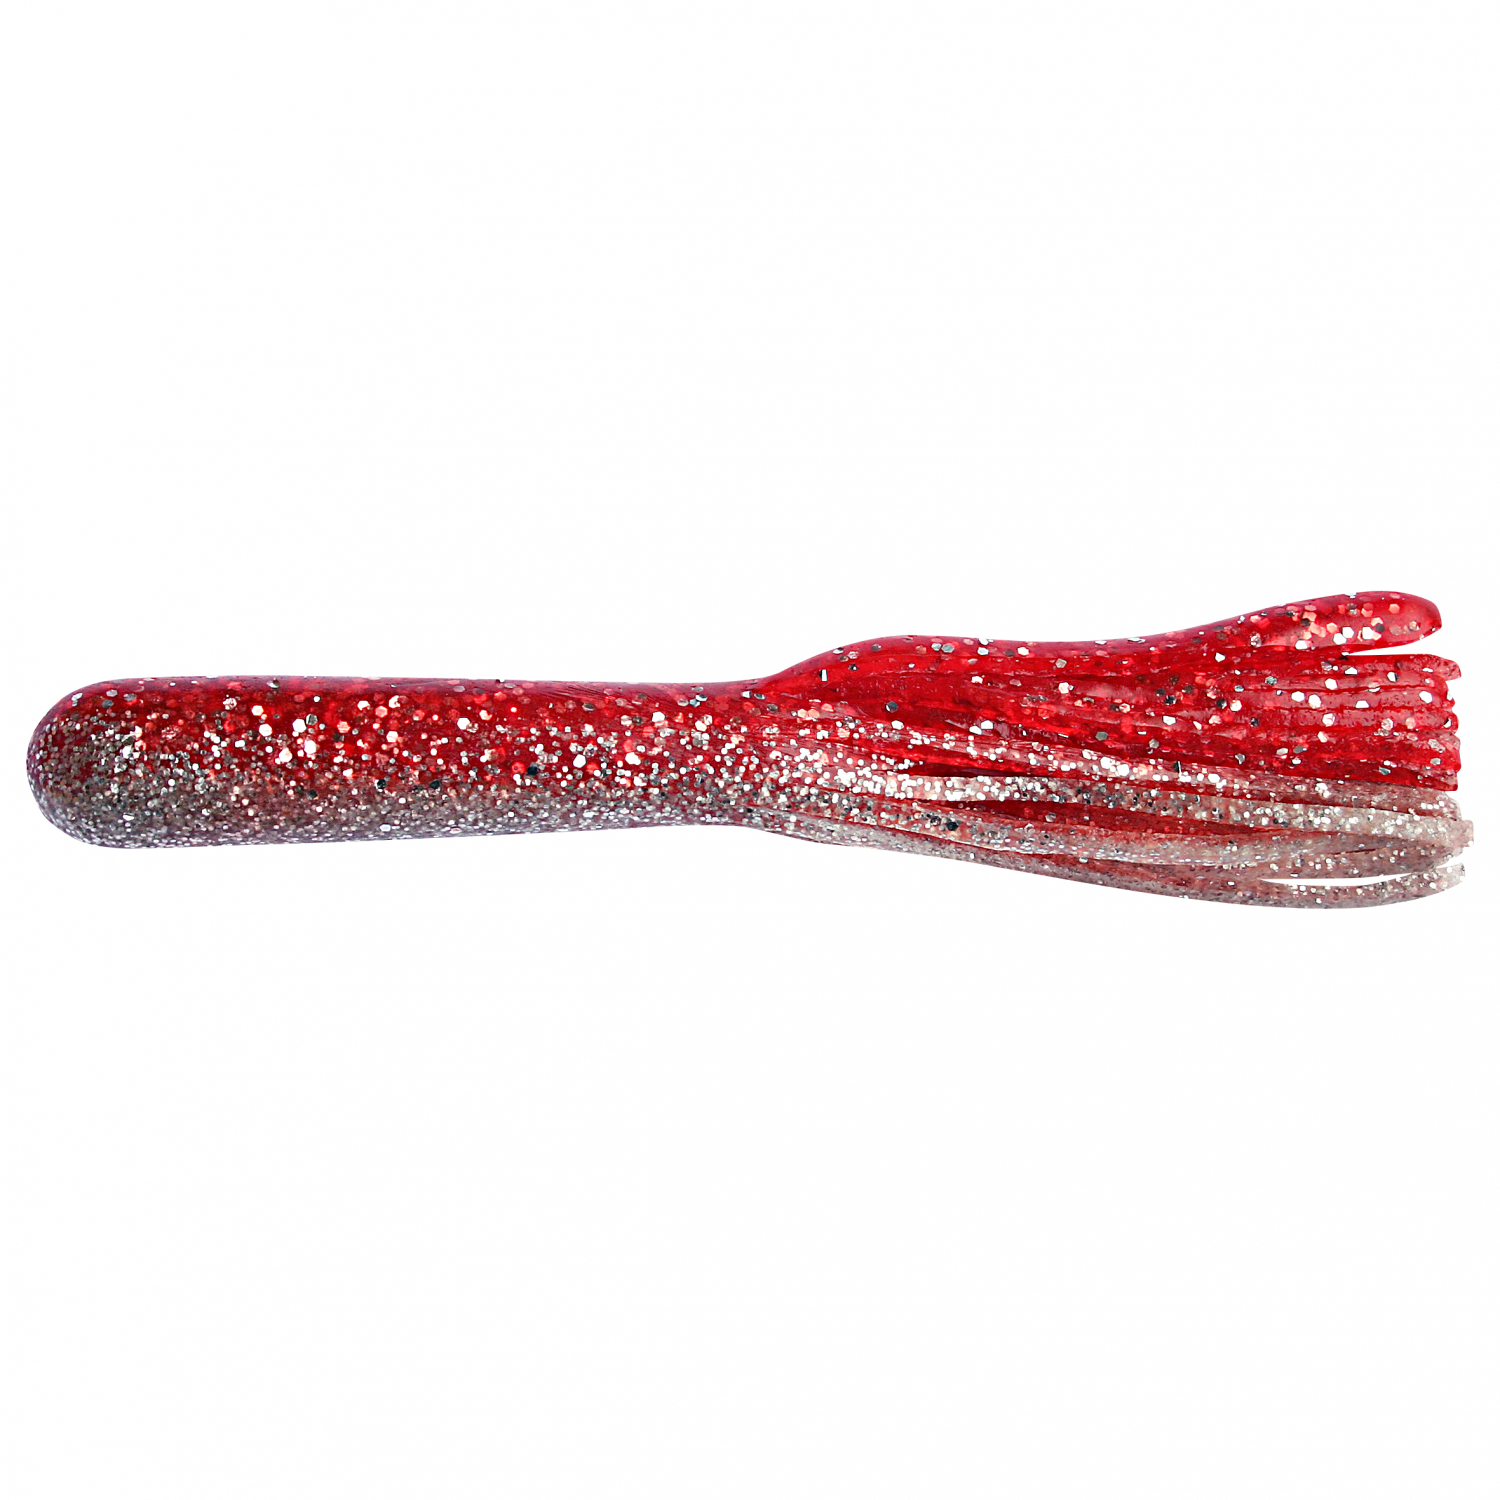 ShadXperts Fringed Bait Magnum Tube 5" (crystal glitter/red-glitter) 